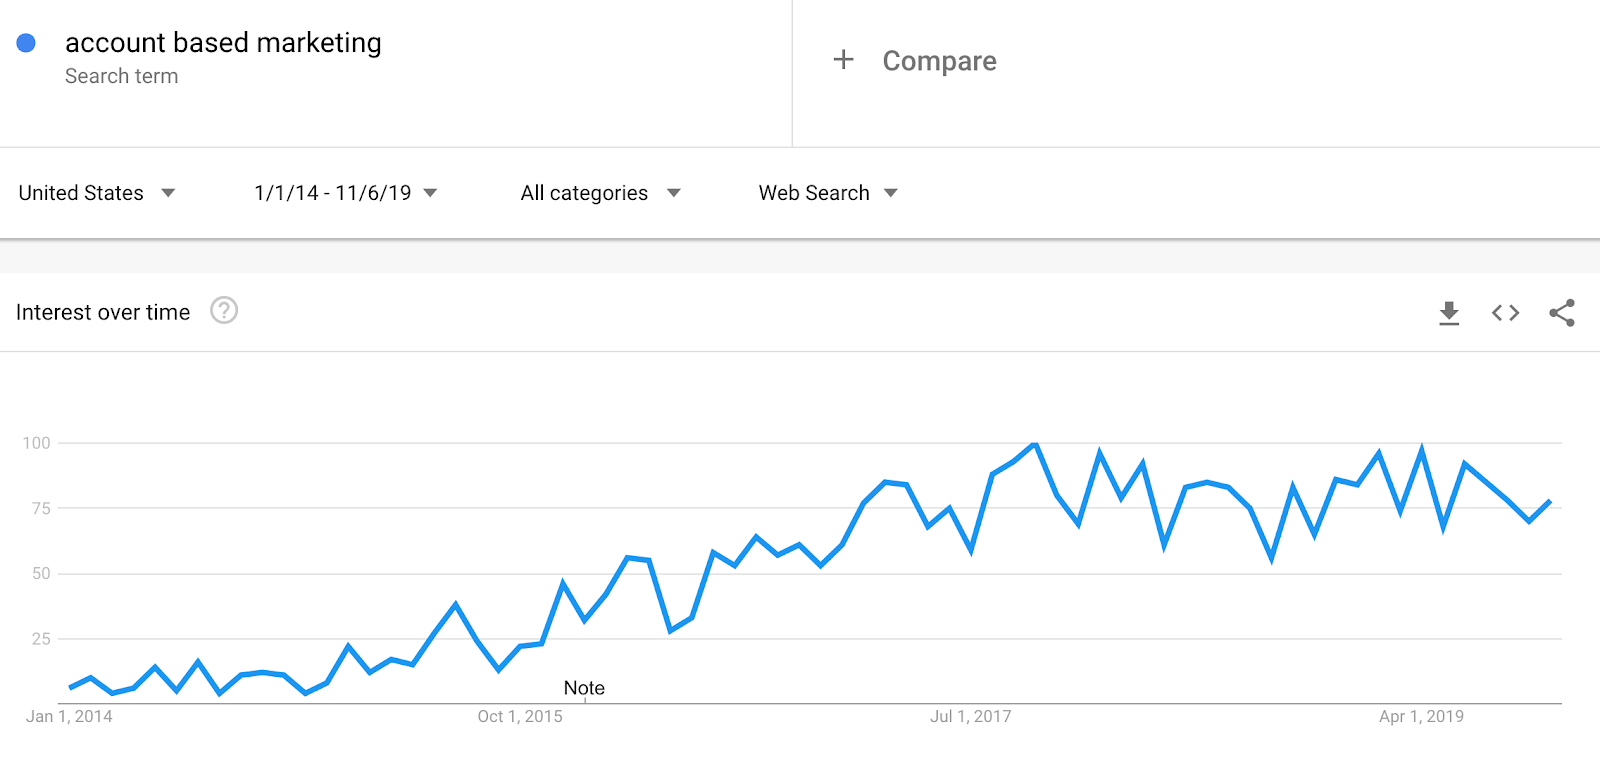 Account-Based Marketing Google Trends Data